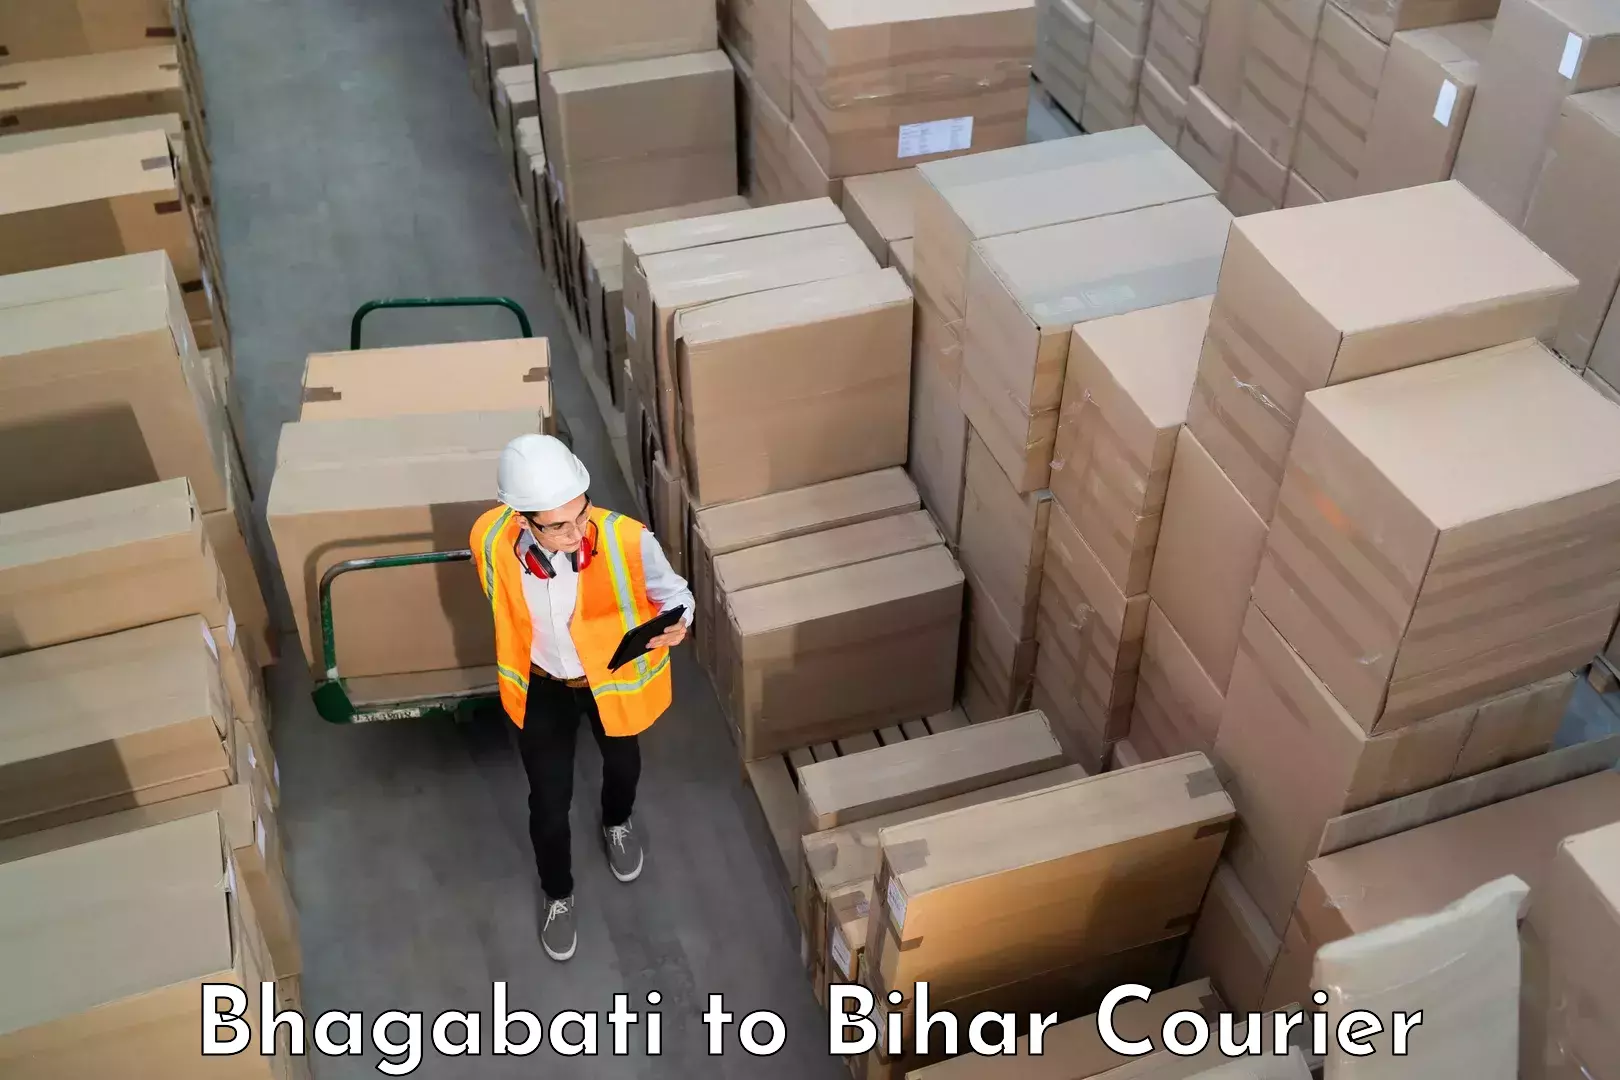 Luggage shipment specialists Bhagabati to Bihar